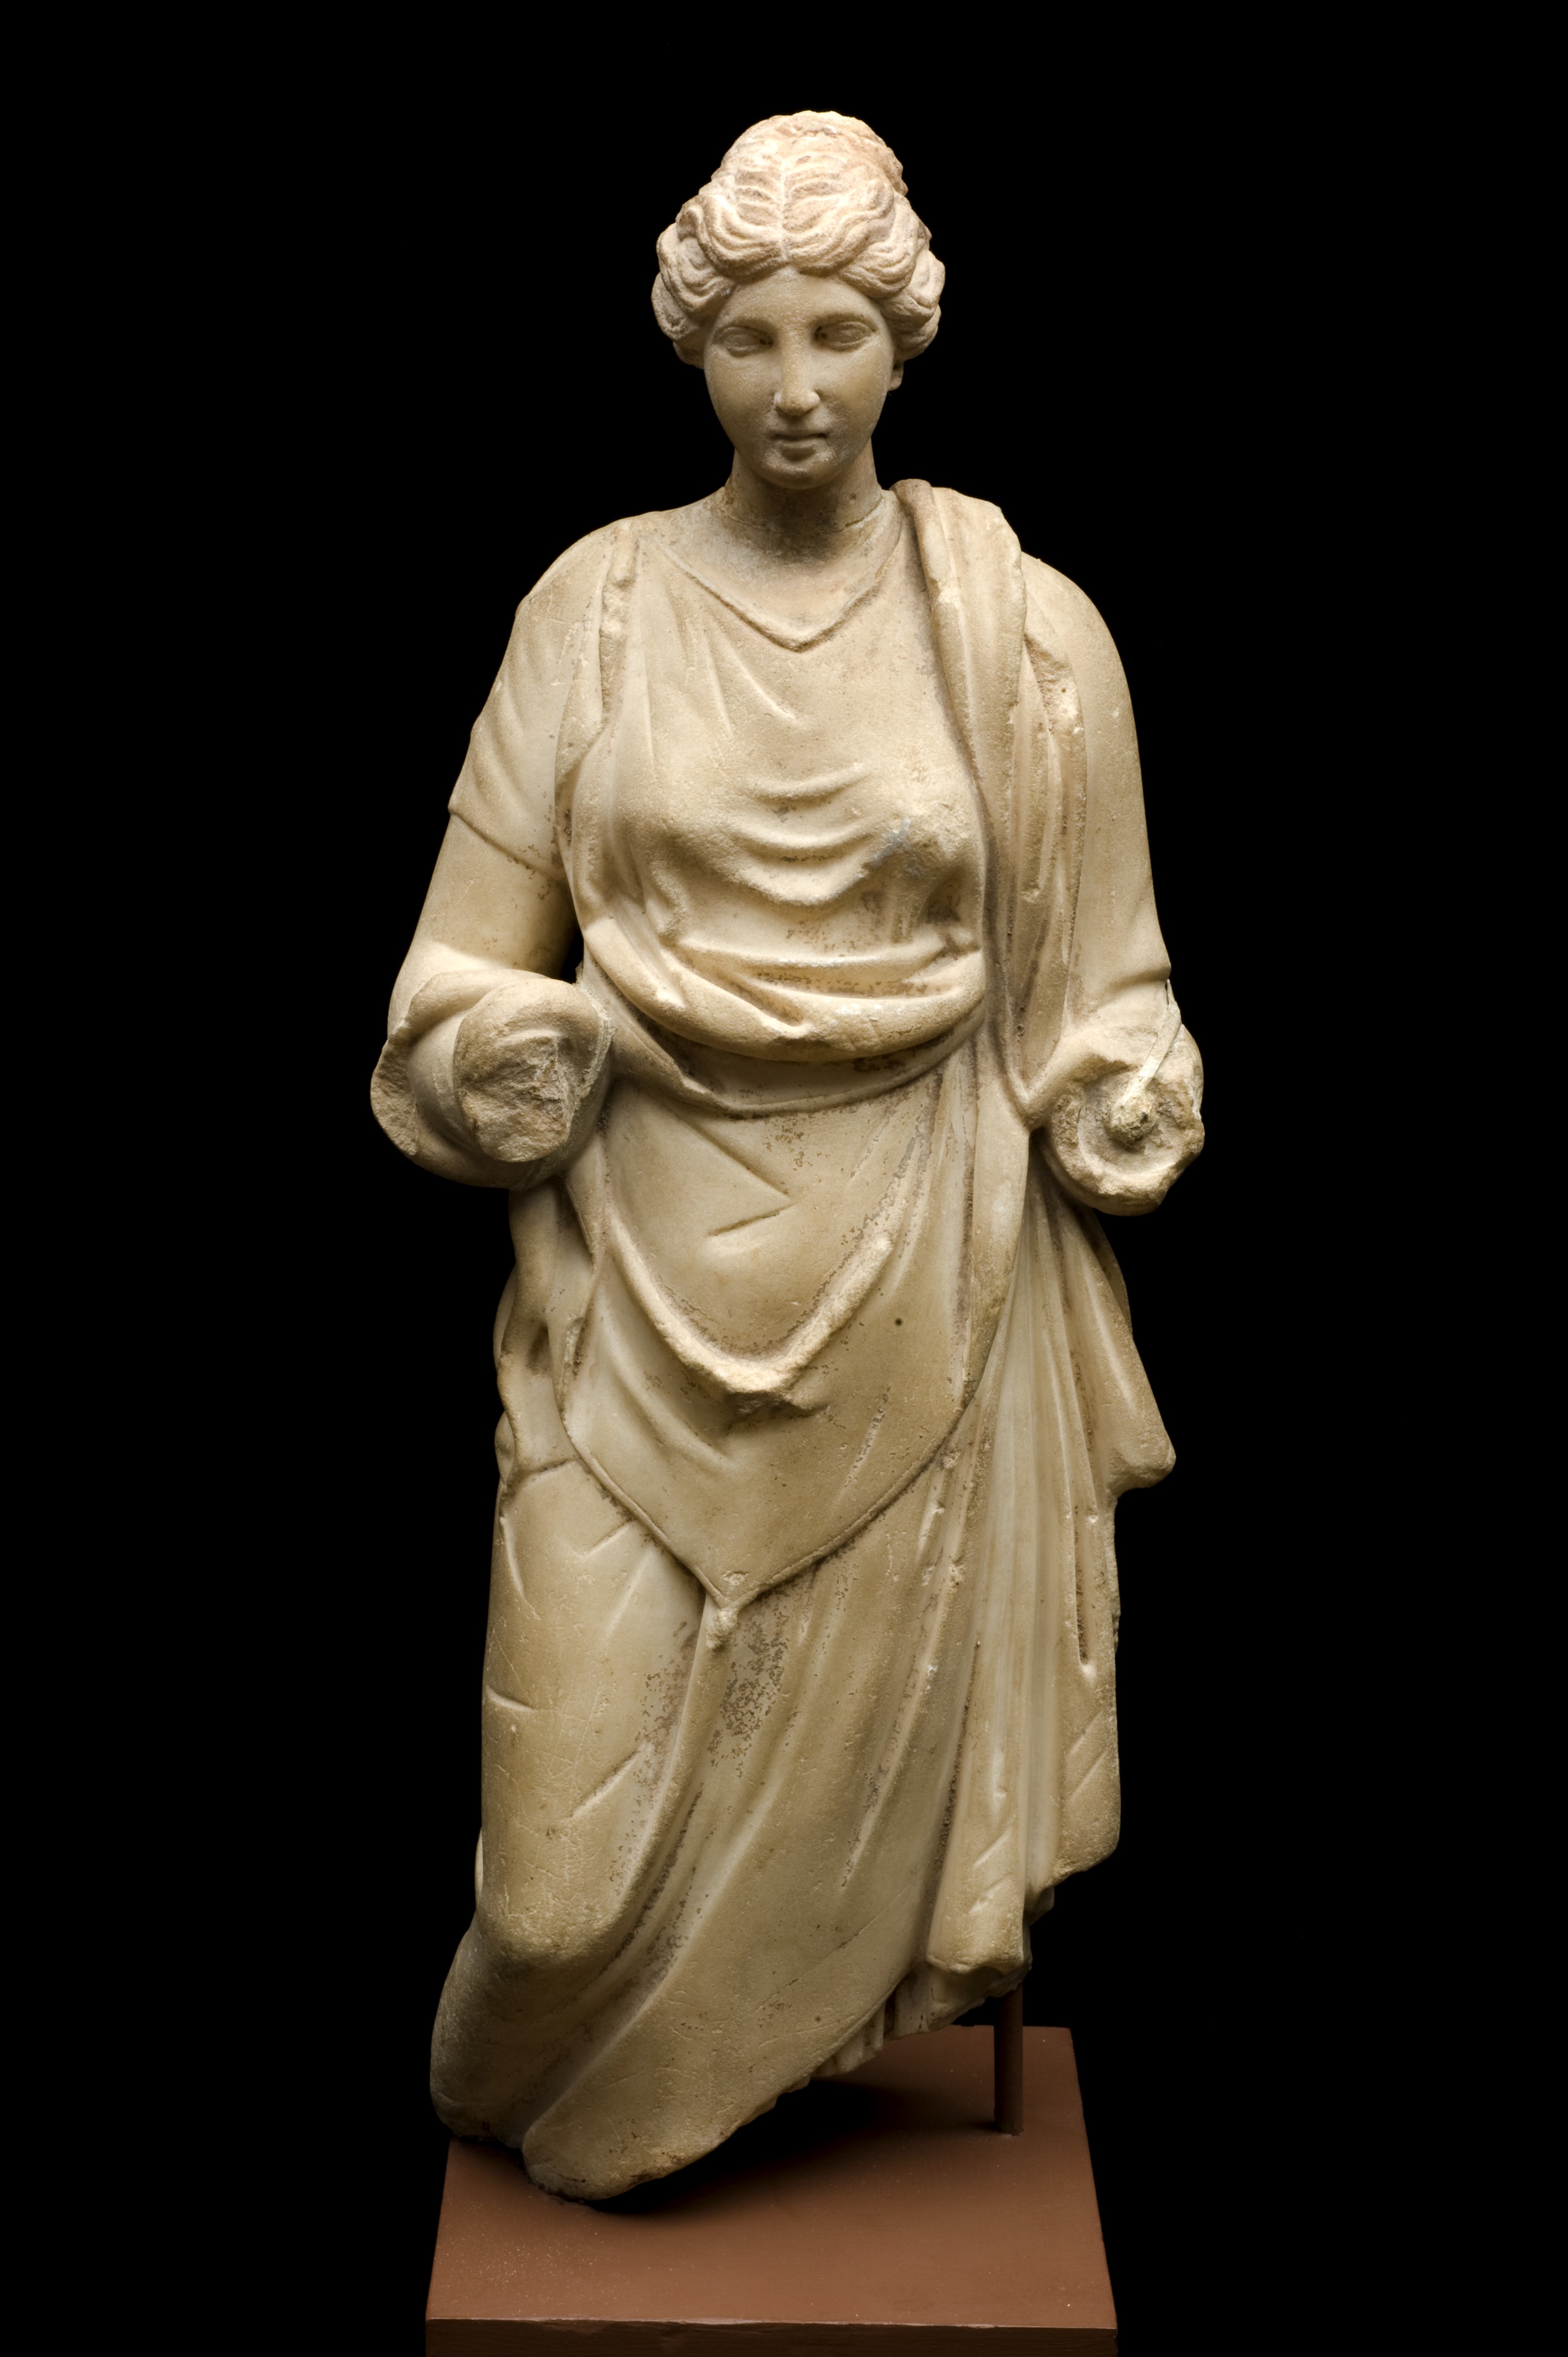 L0057462 Statue of the goddess Hygeia, Roman, 100 BCE - 100 CE